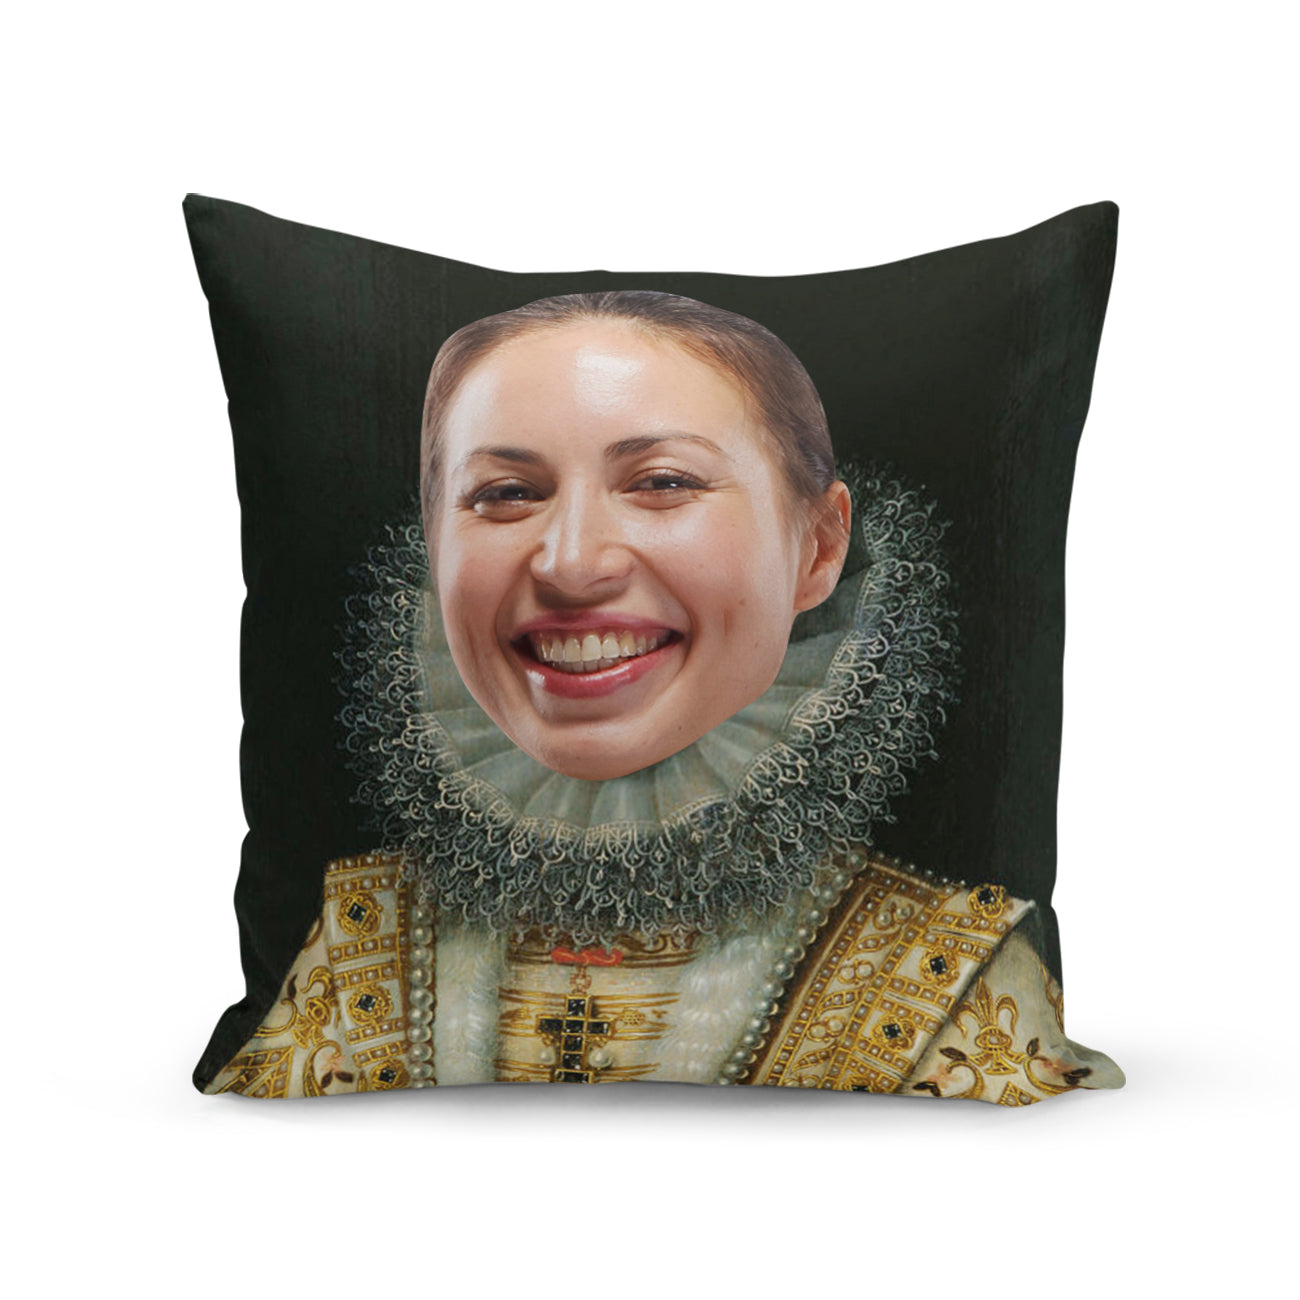 The Lady Cushion